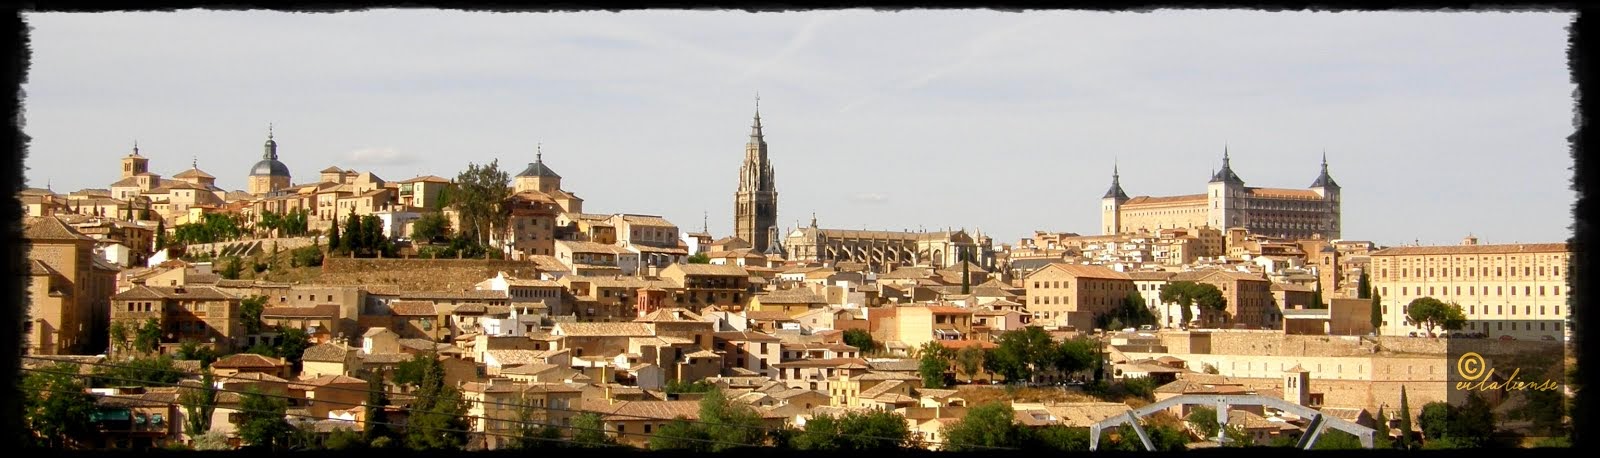 | Vista de Toledo |